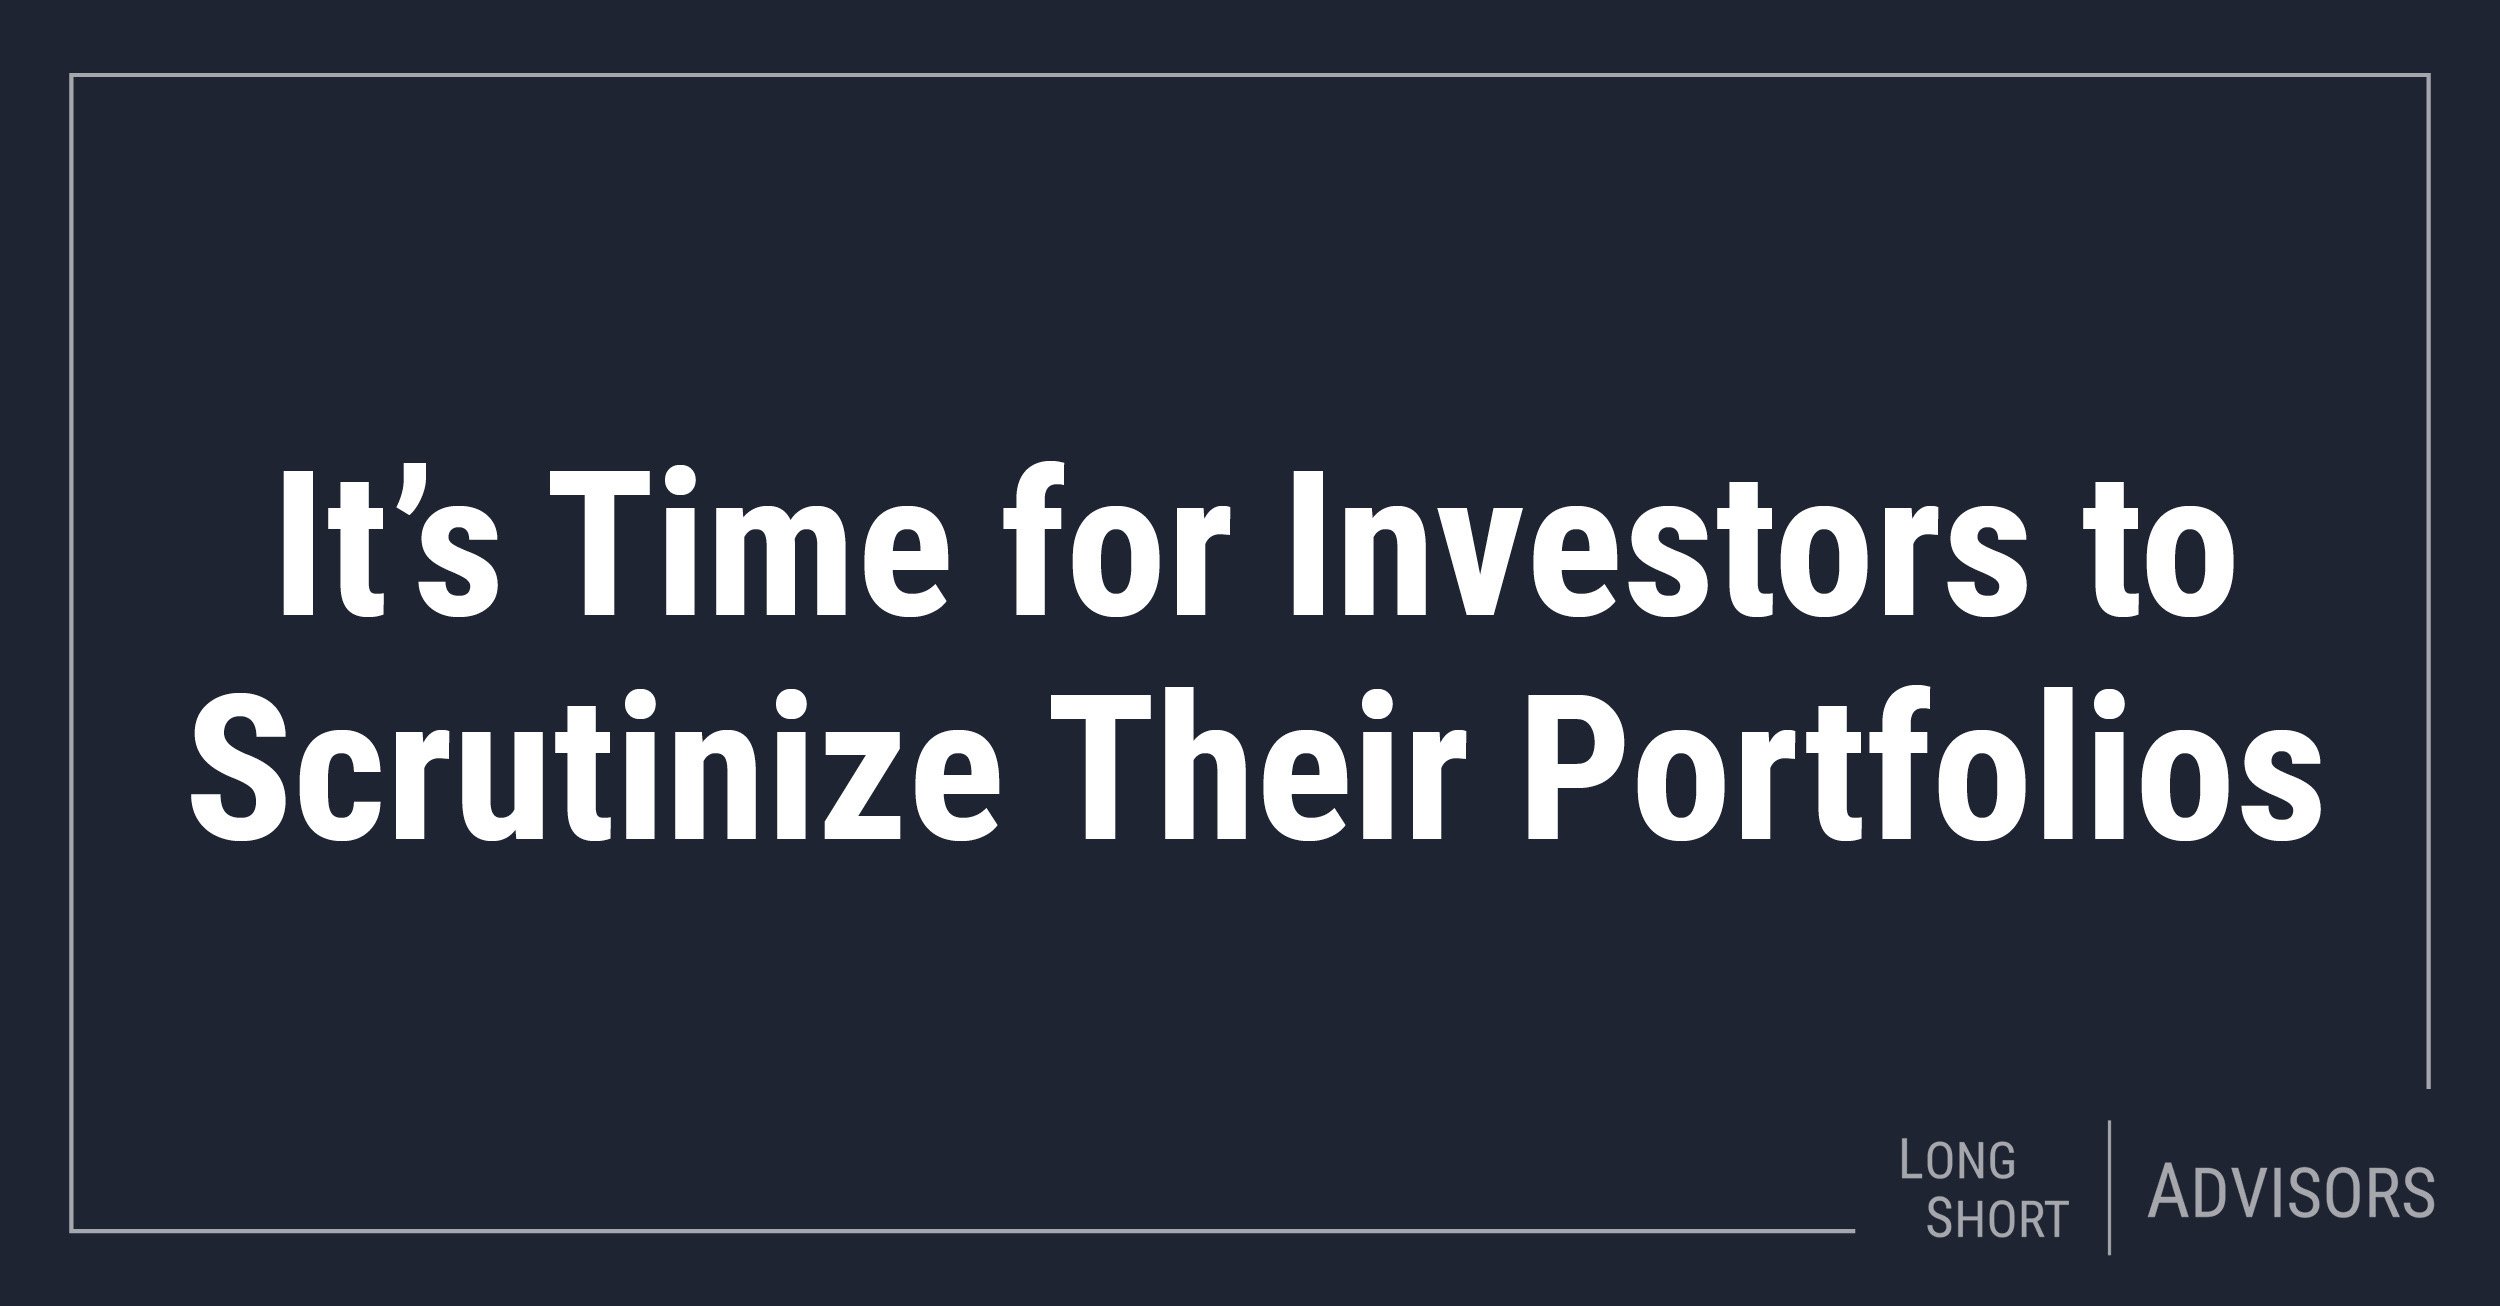 It’s Time for Investors to Scrutinize Their Portfolios